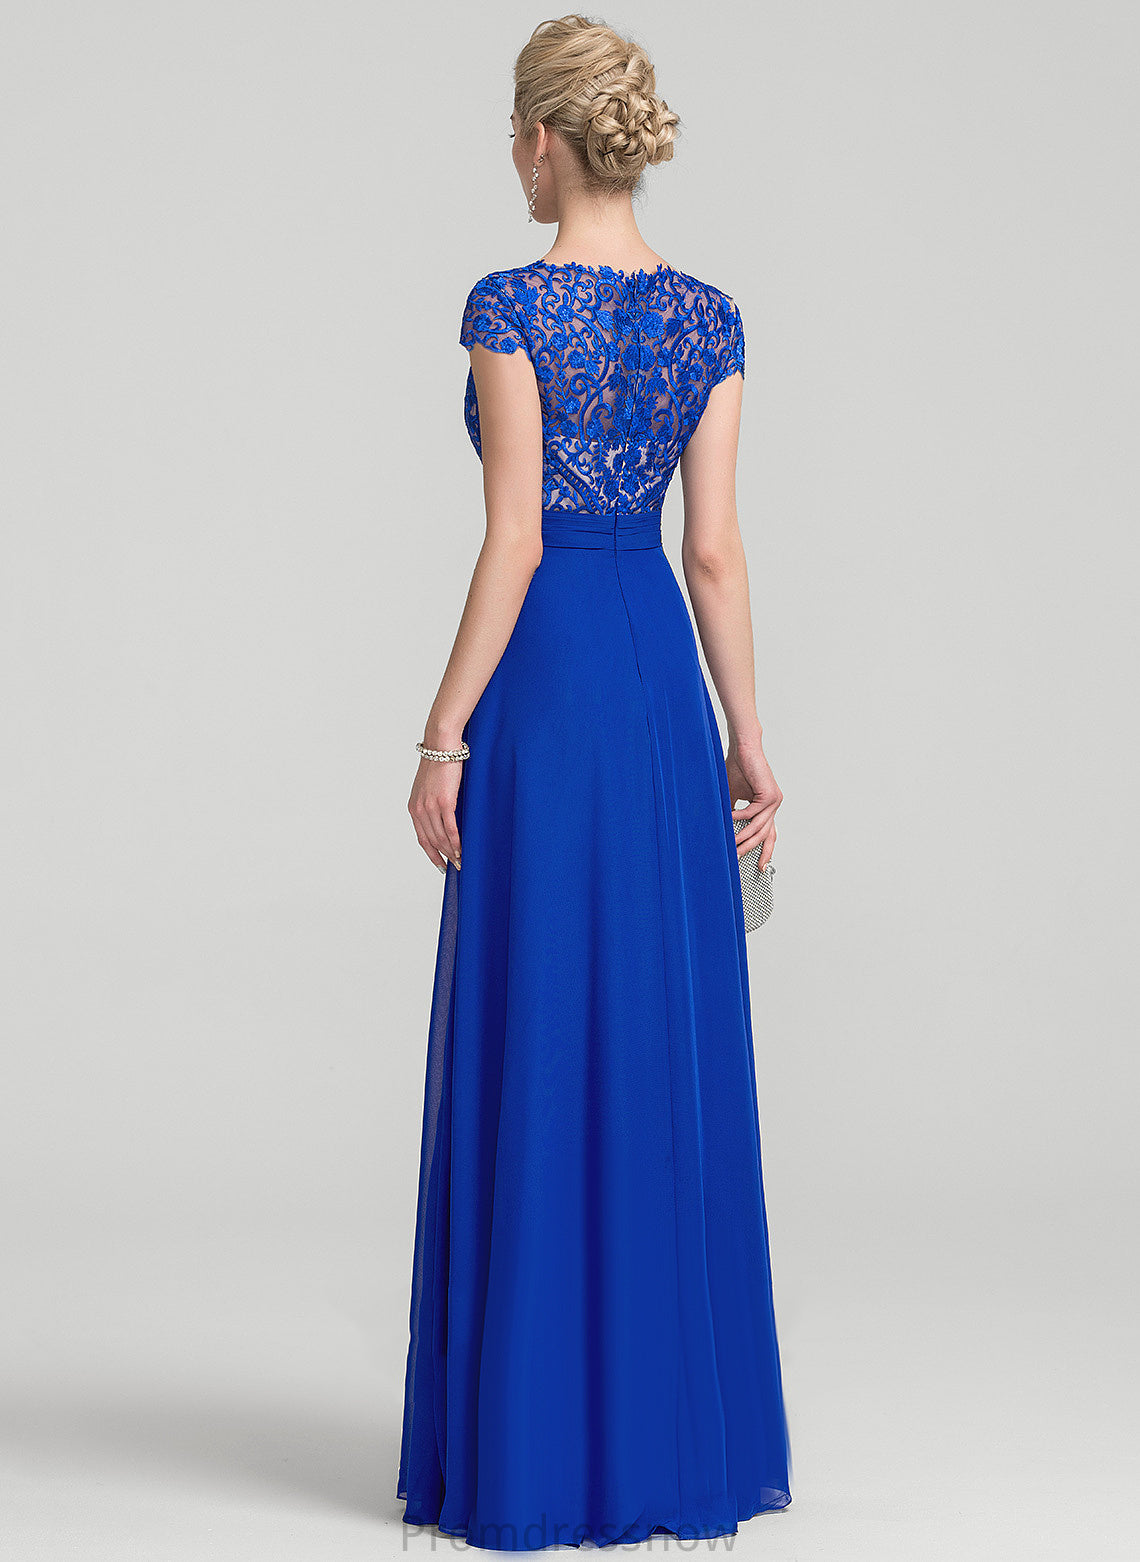 Briley V-neck Floor-Length Lace A-Line Prom Dresses Chiffon